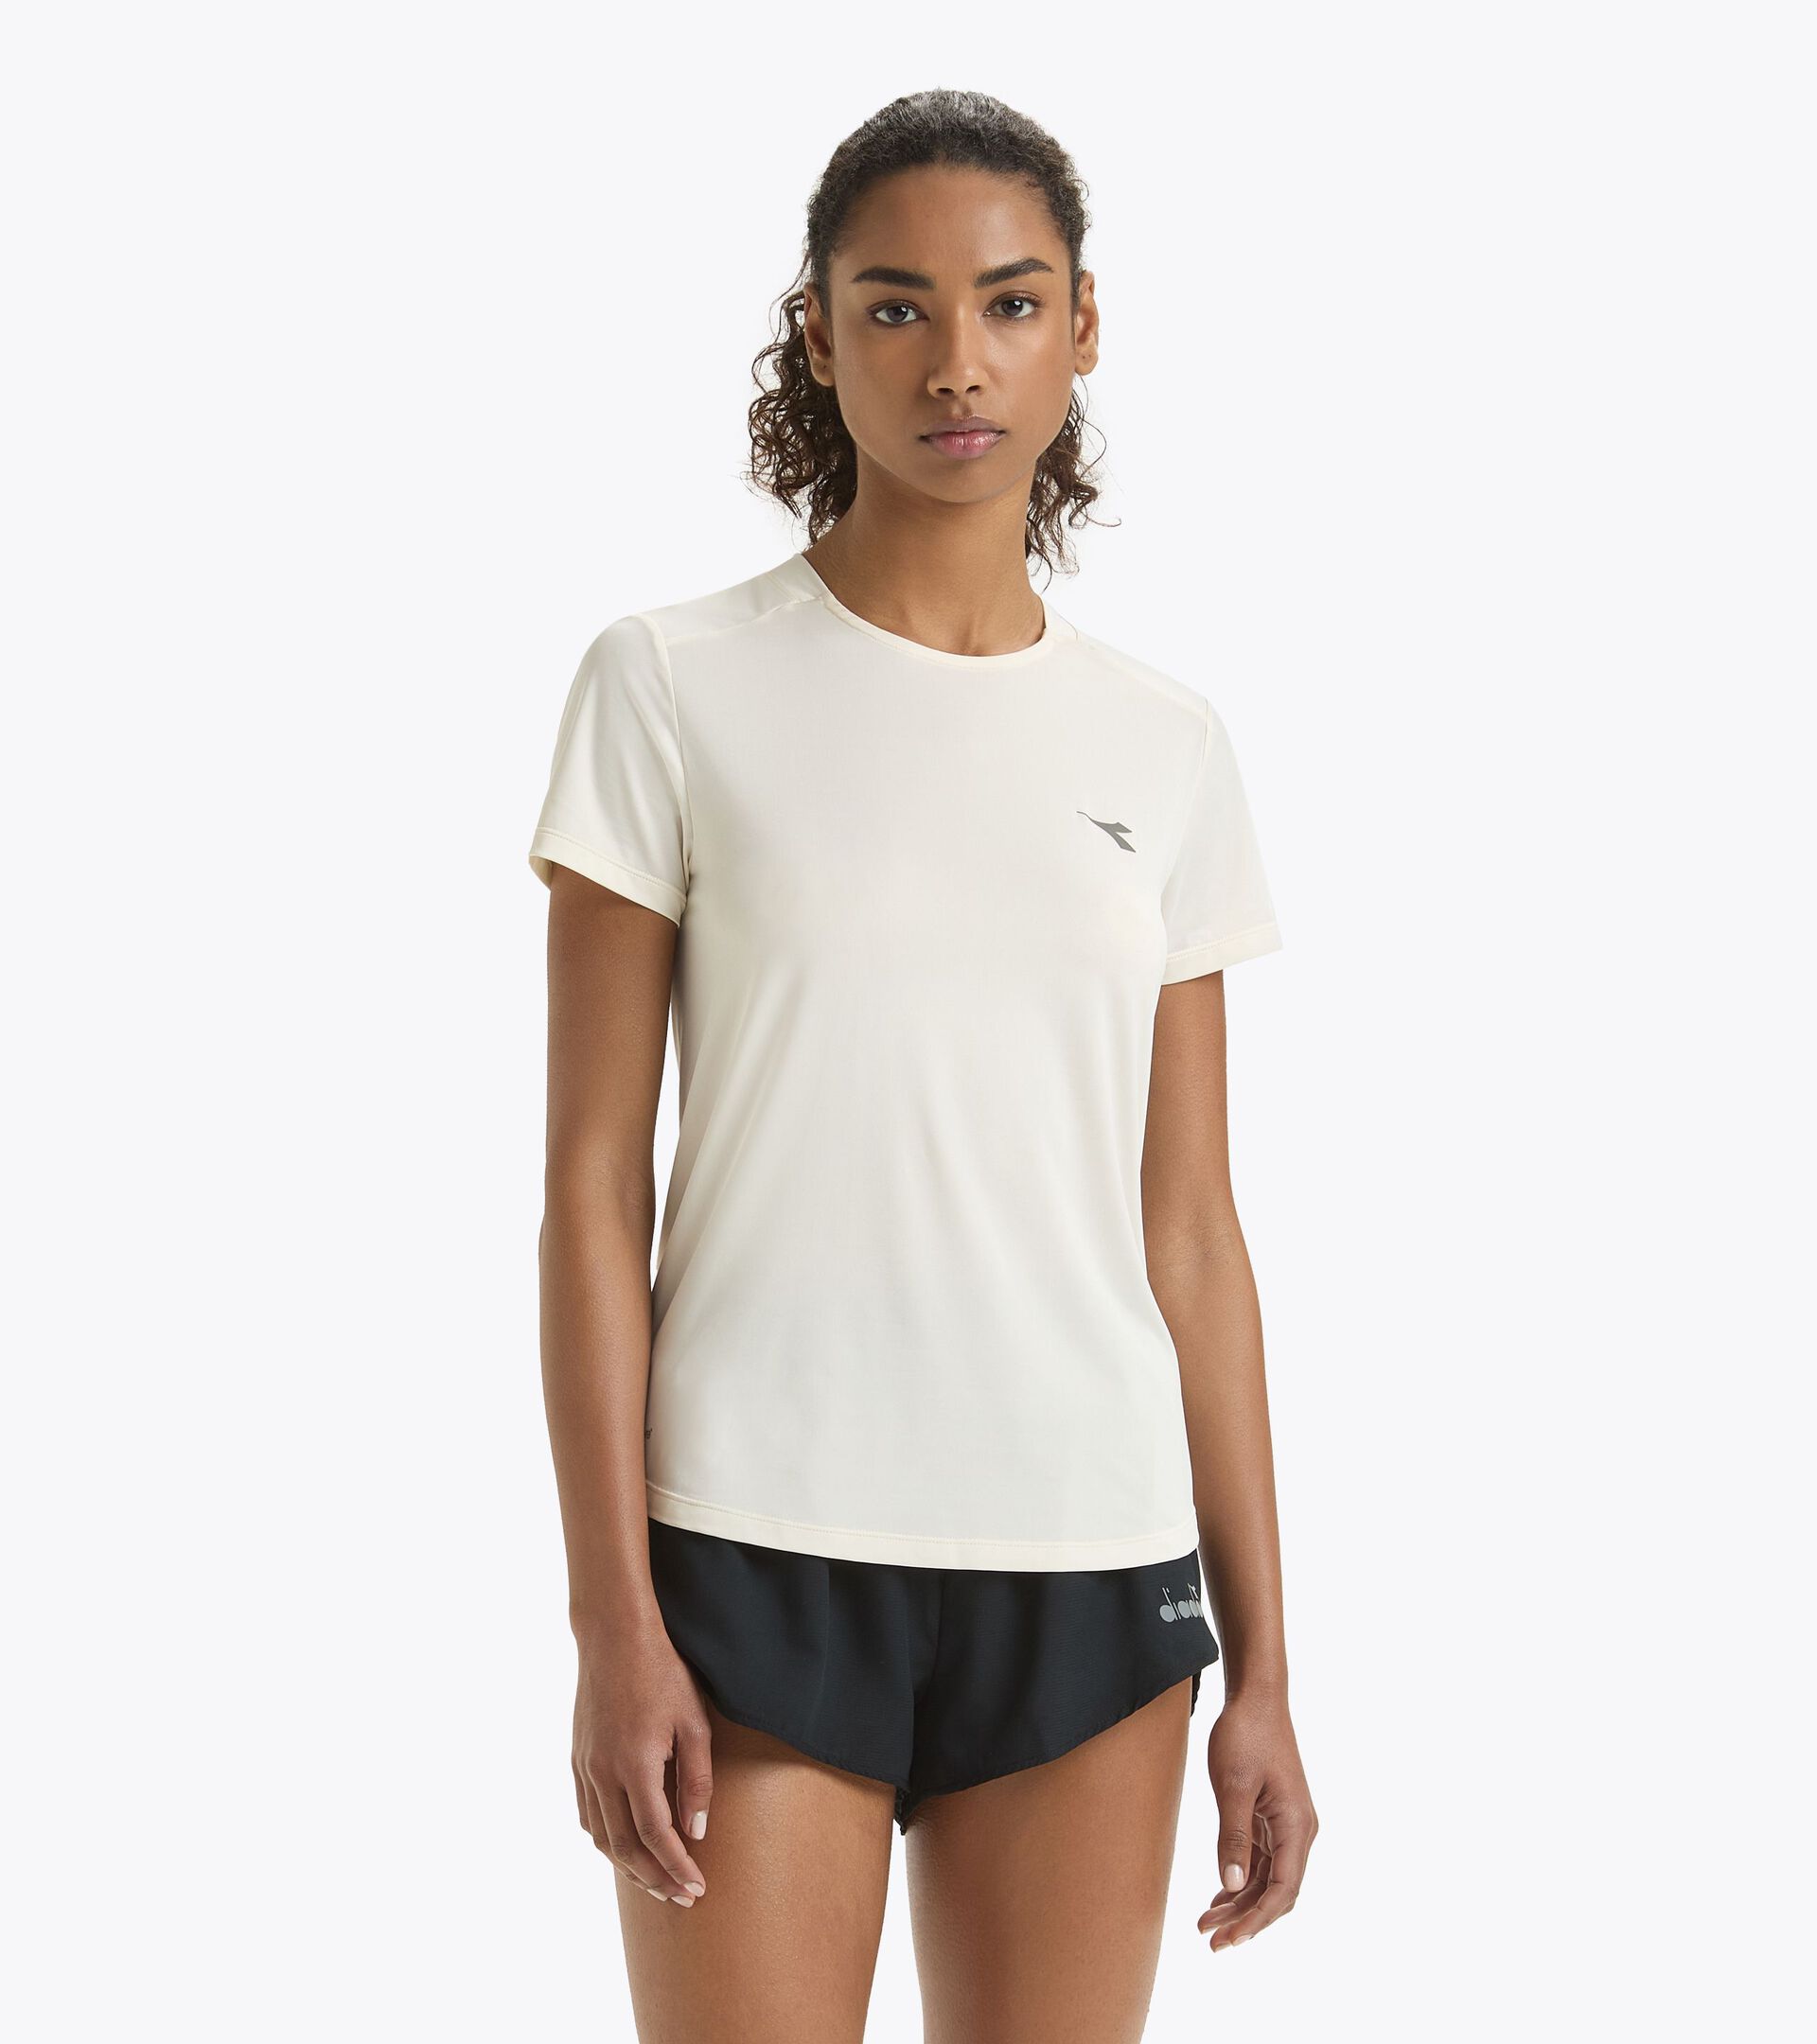 Camiseta de running - Tejido ligero - Mujer
 L. SUPER LIGHT SS T-SHIRT BLANCO MURMURAR - Diadora